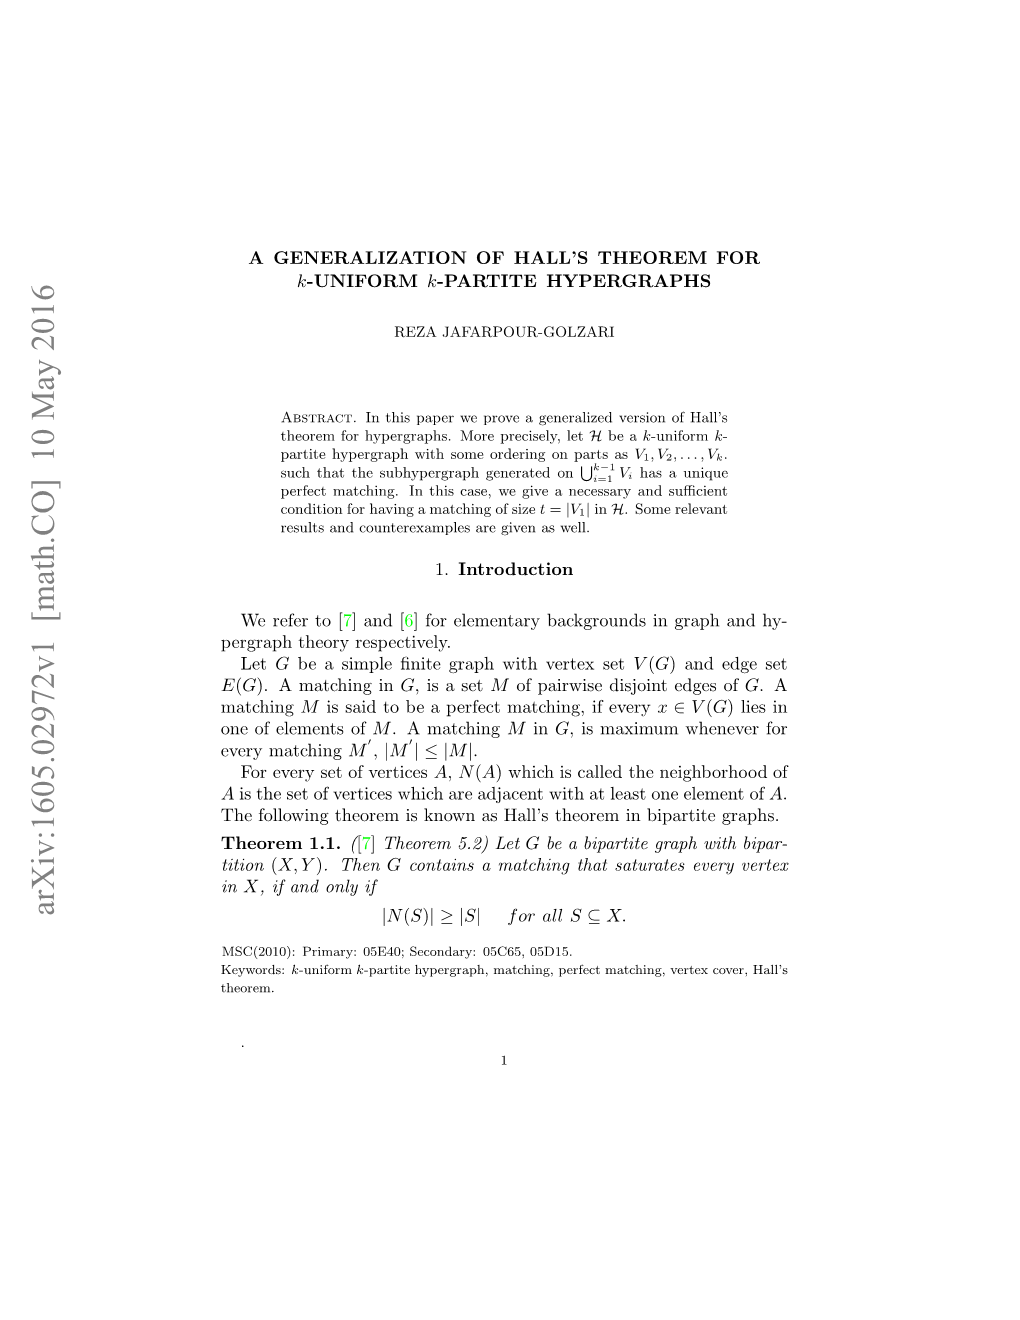 A Generalization of Hall's Theorem for K-Uniform K-Partite Hypergraphs